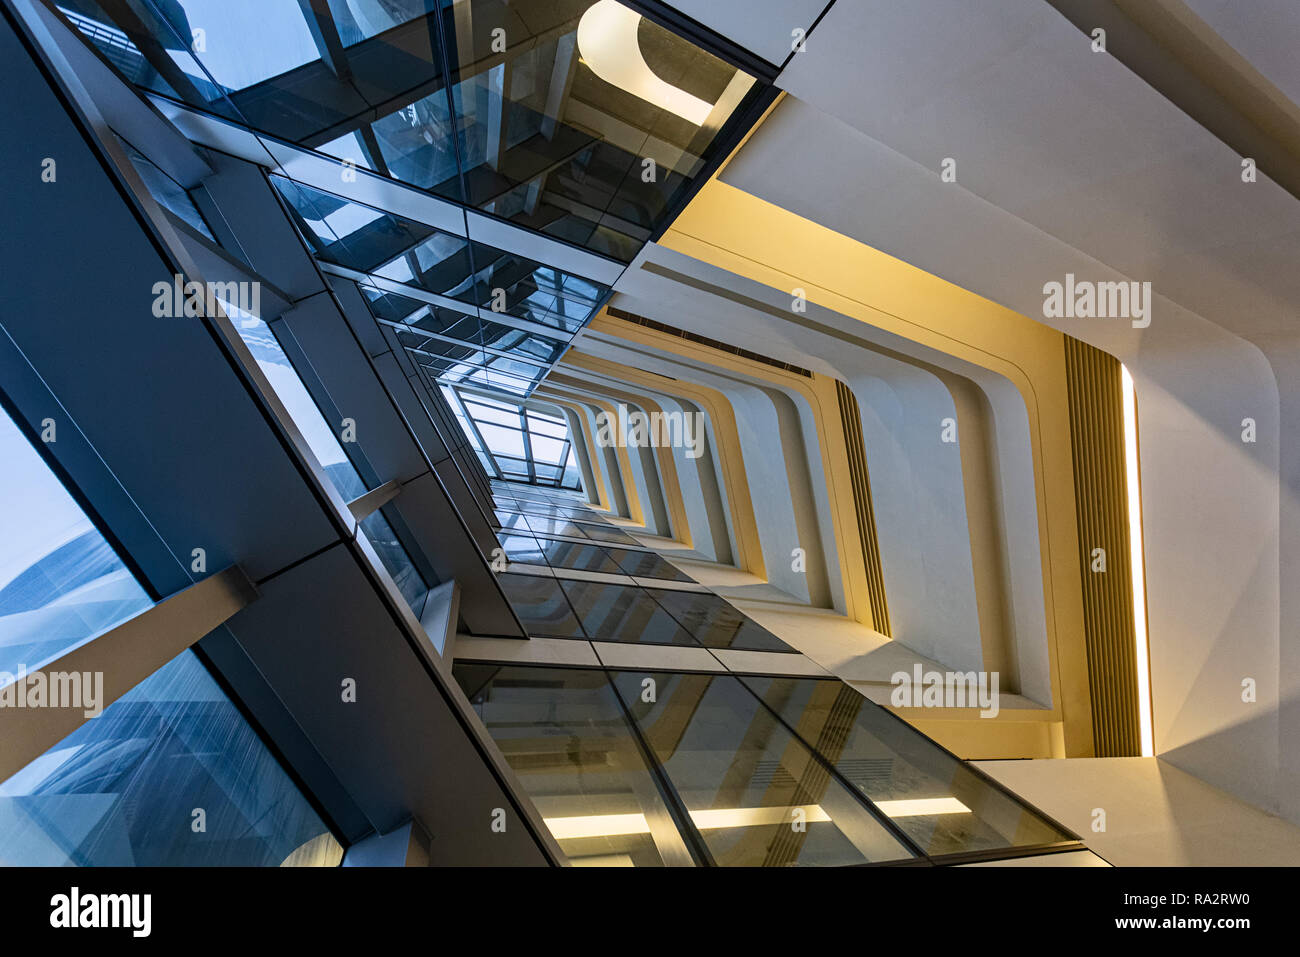 Interior of the Jockey Club Innovation Tower at Hong Kong Polytechnic University Stock Photo